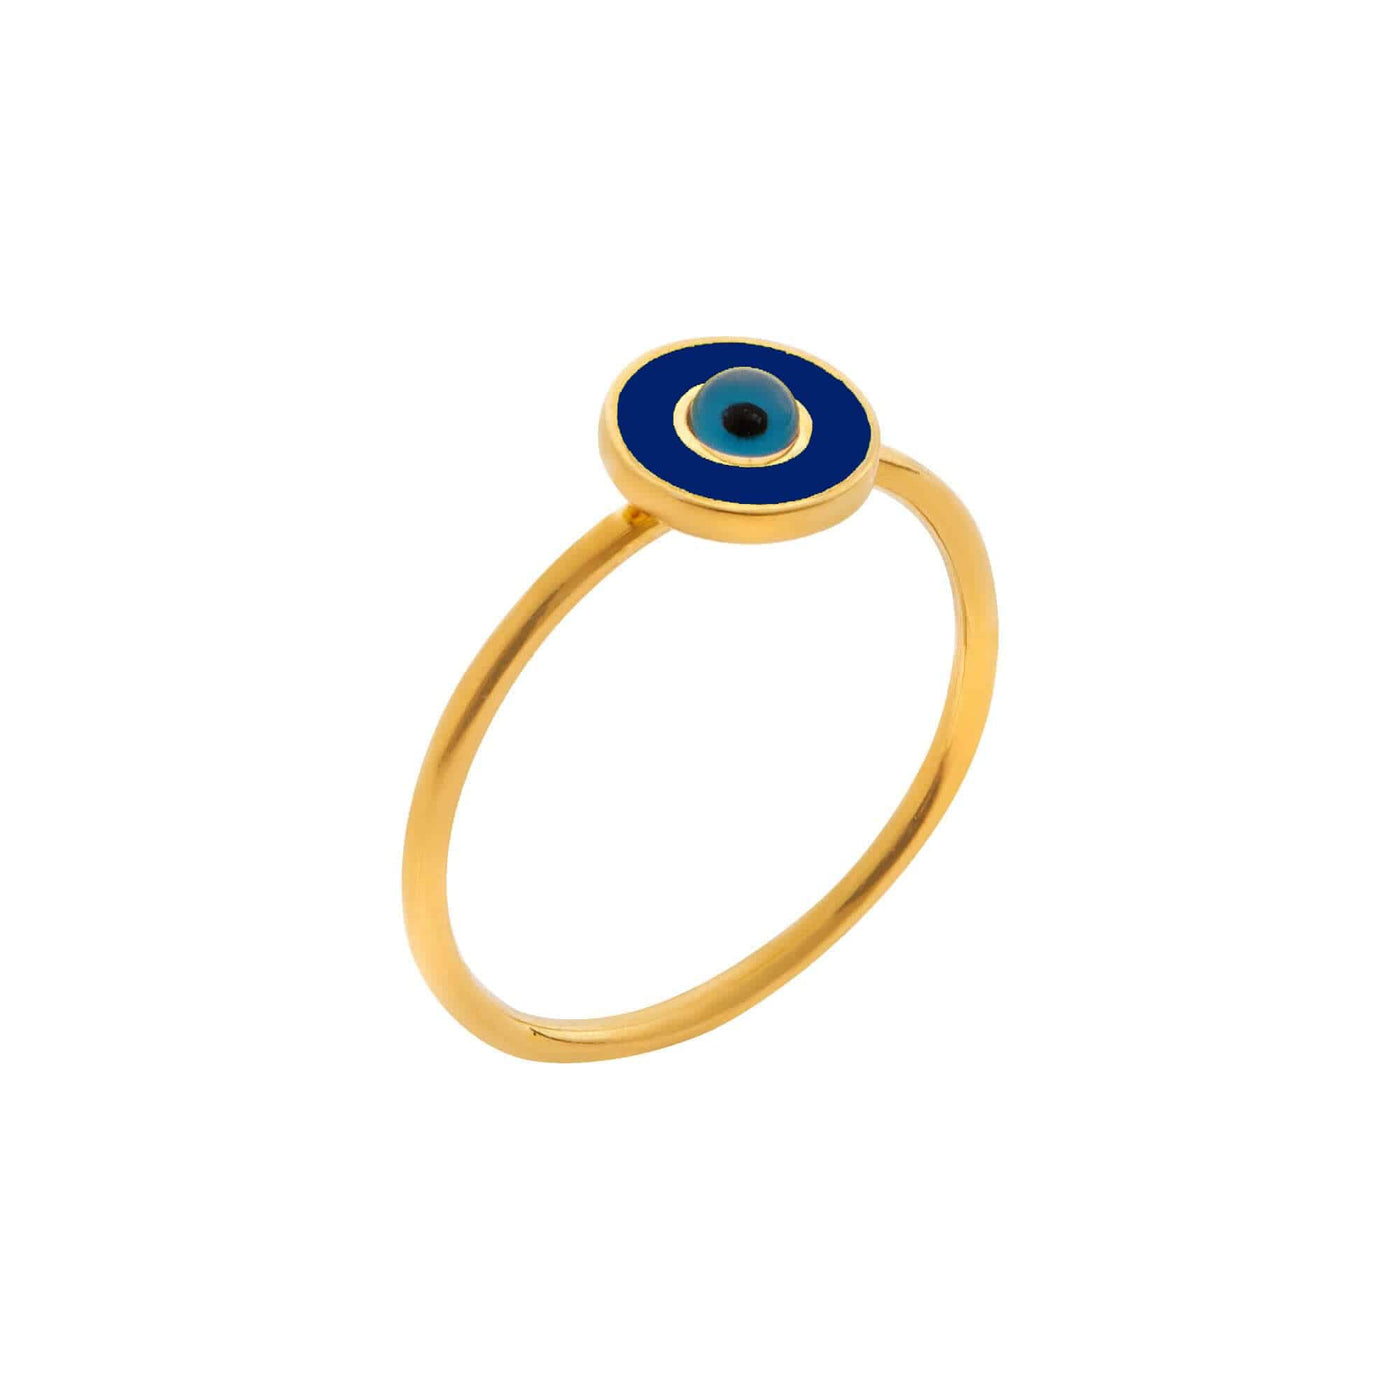 Neon Blue Eye Ring - Eye M Eyes - Ileana Makri store